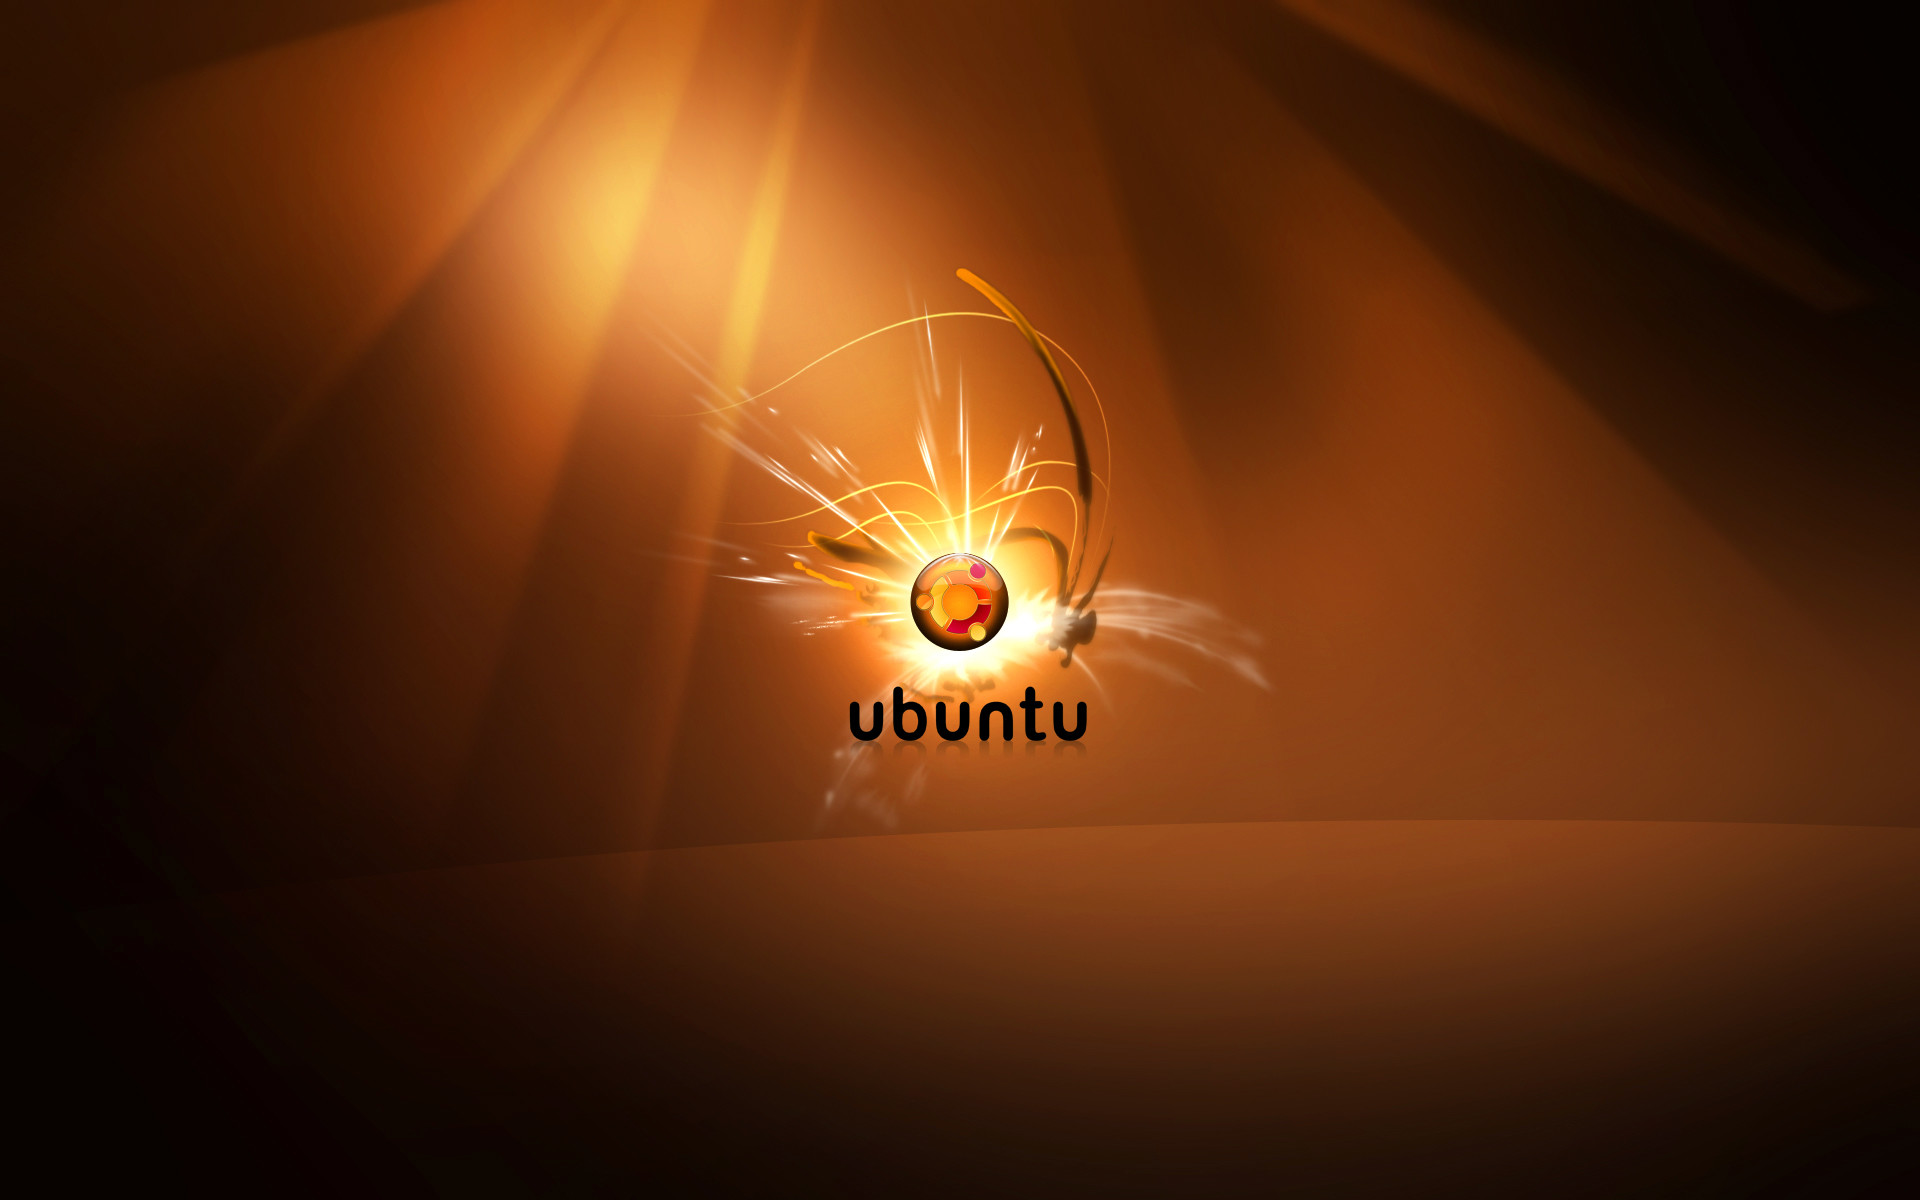 1920x1200 Ubuntu Wallpaper - http://wallpaperzoo.com/ubuntu-wallpaper-10183